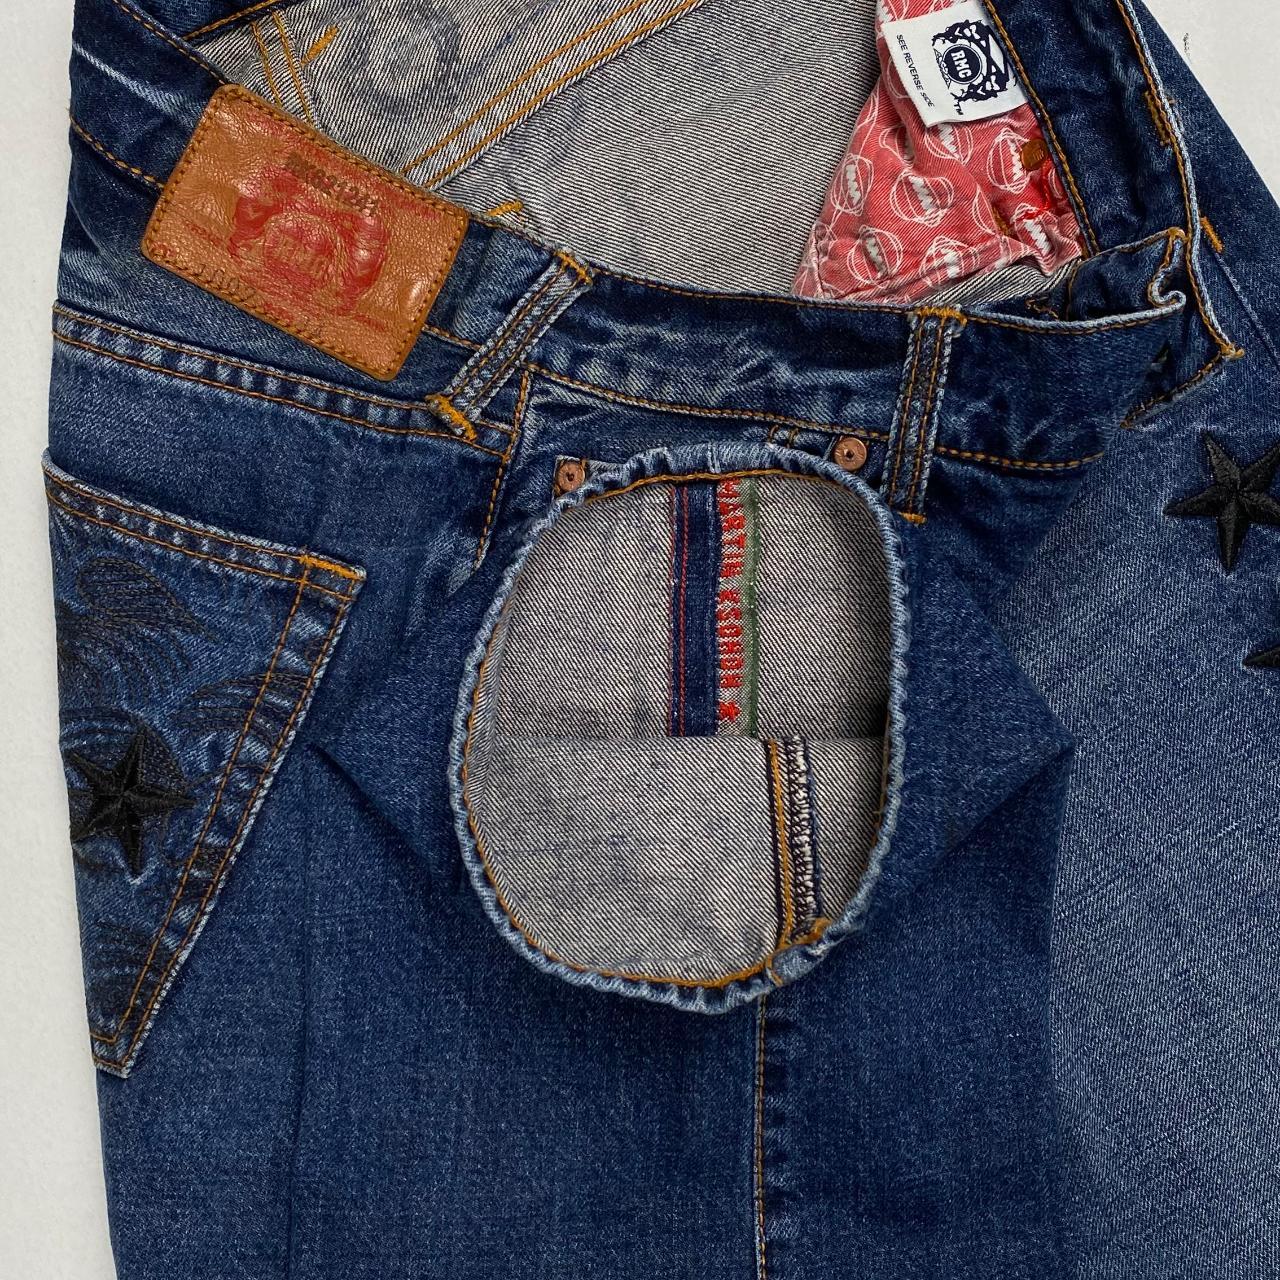 Authentic Vintage RMC Jeans (33")